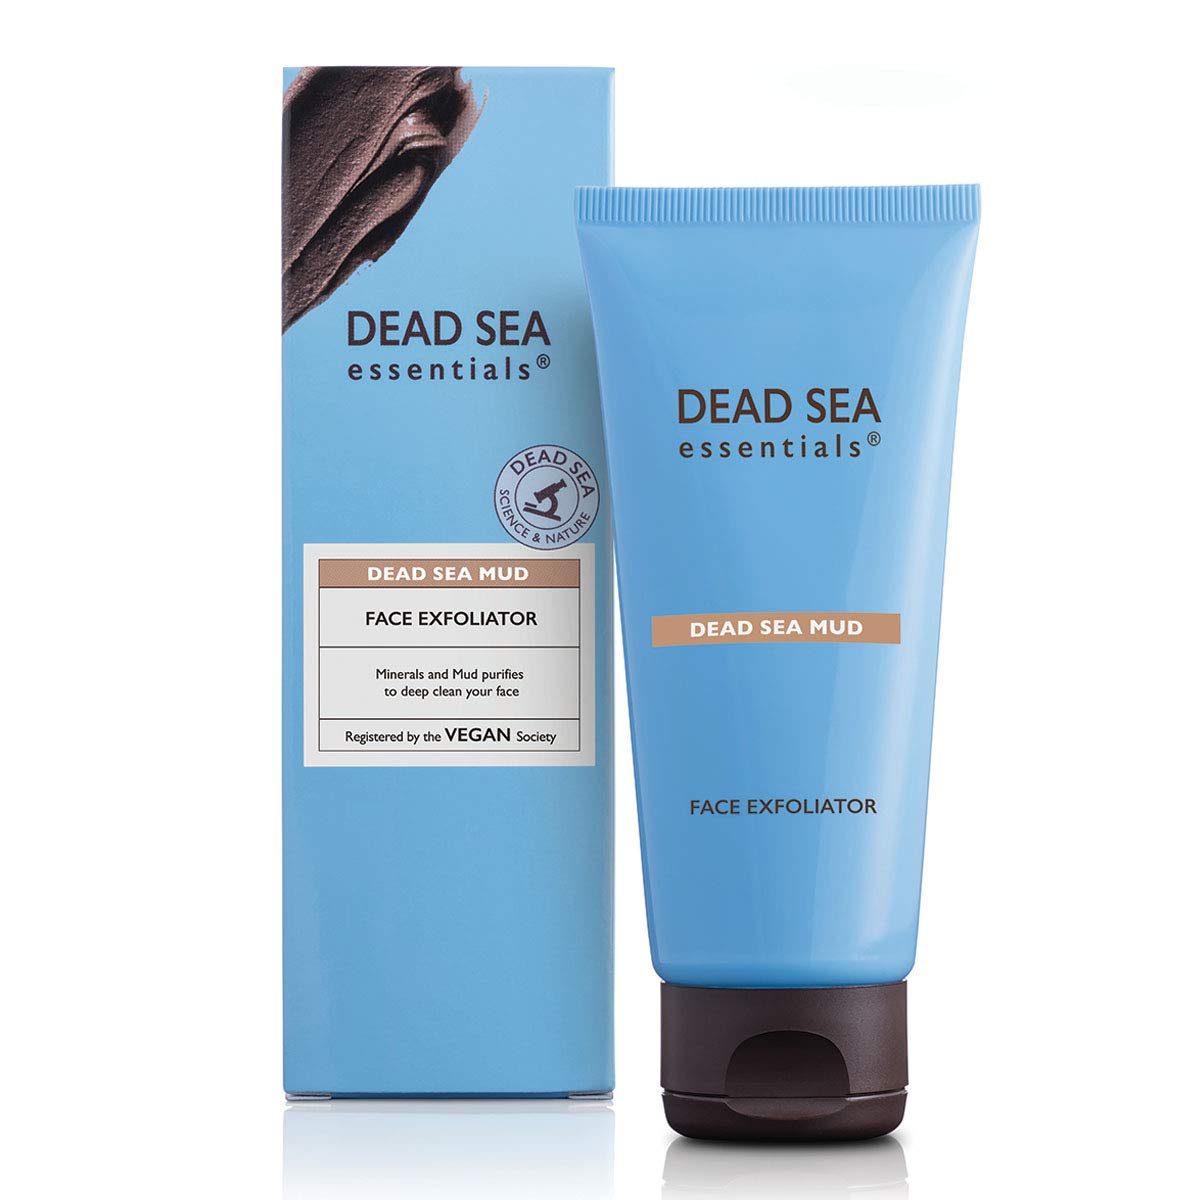 Dead Sea Essentials Dead Sea Mud Face Exfoliator